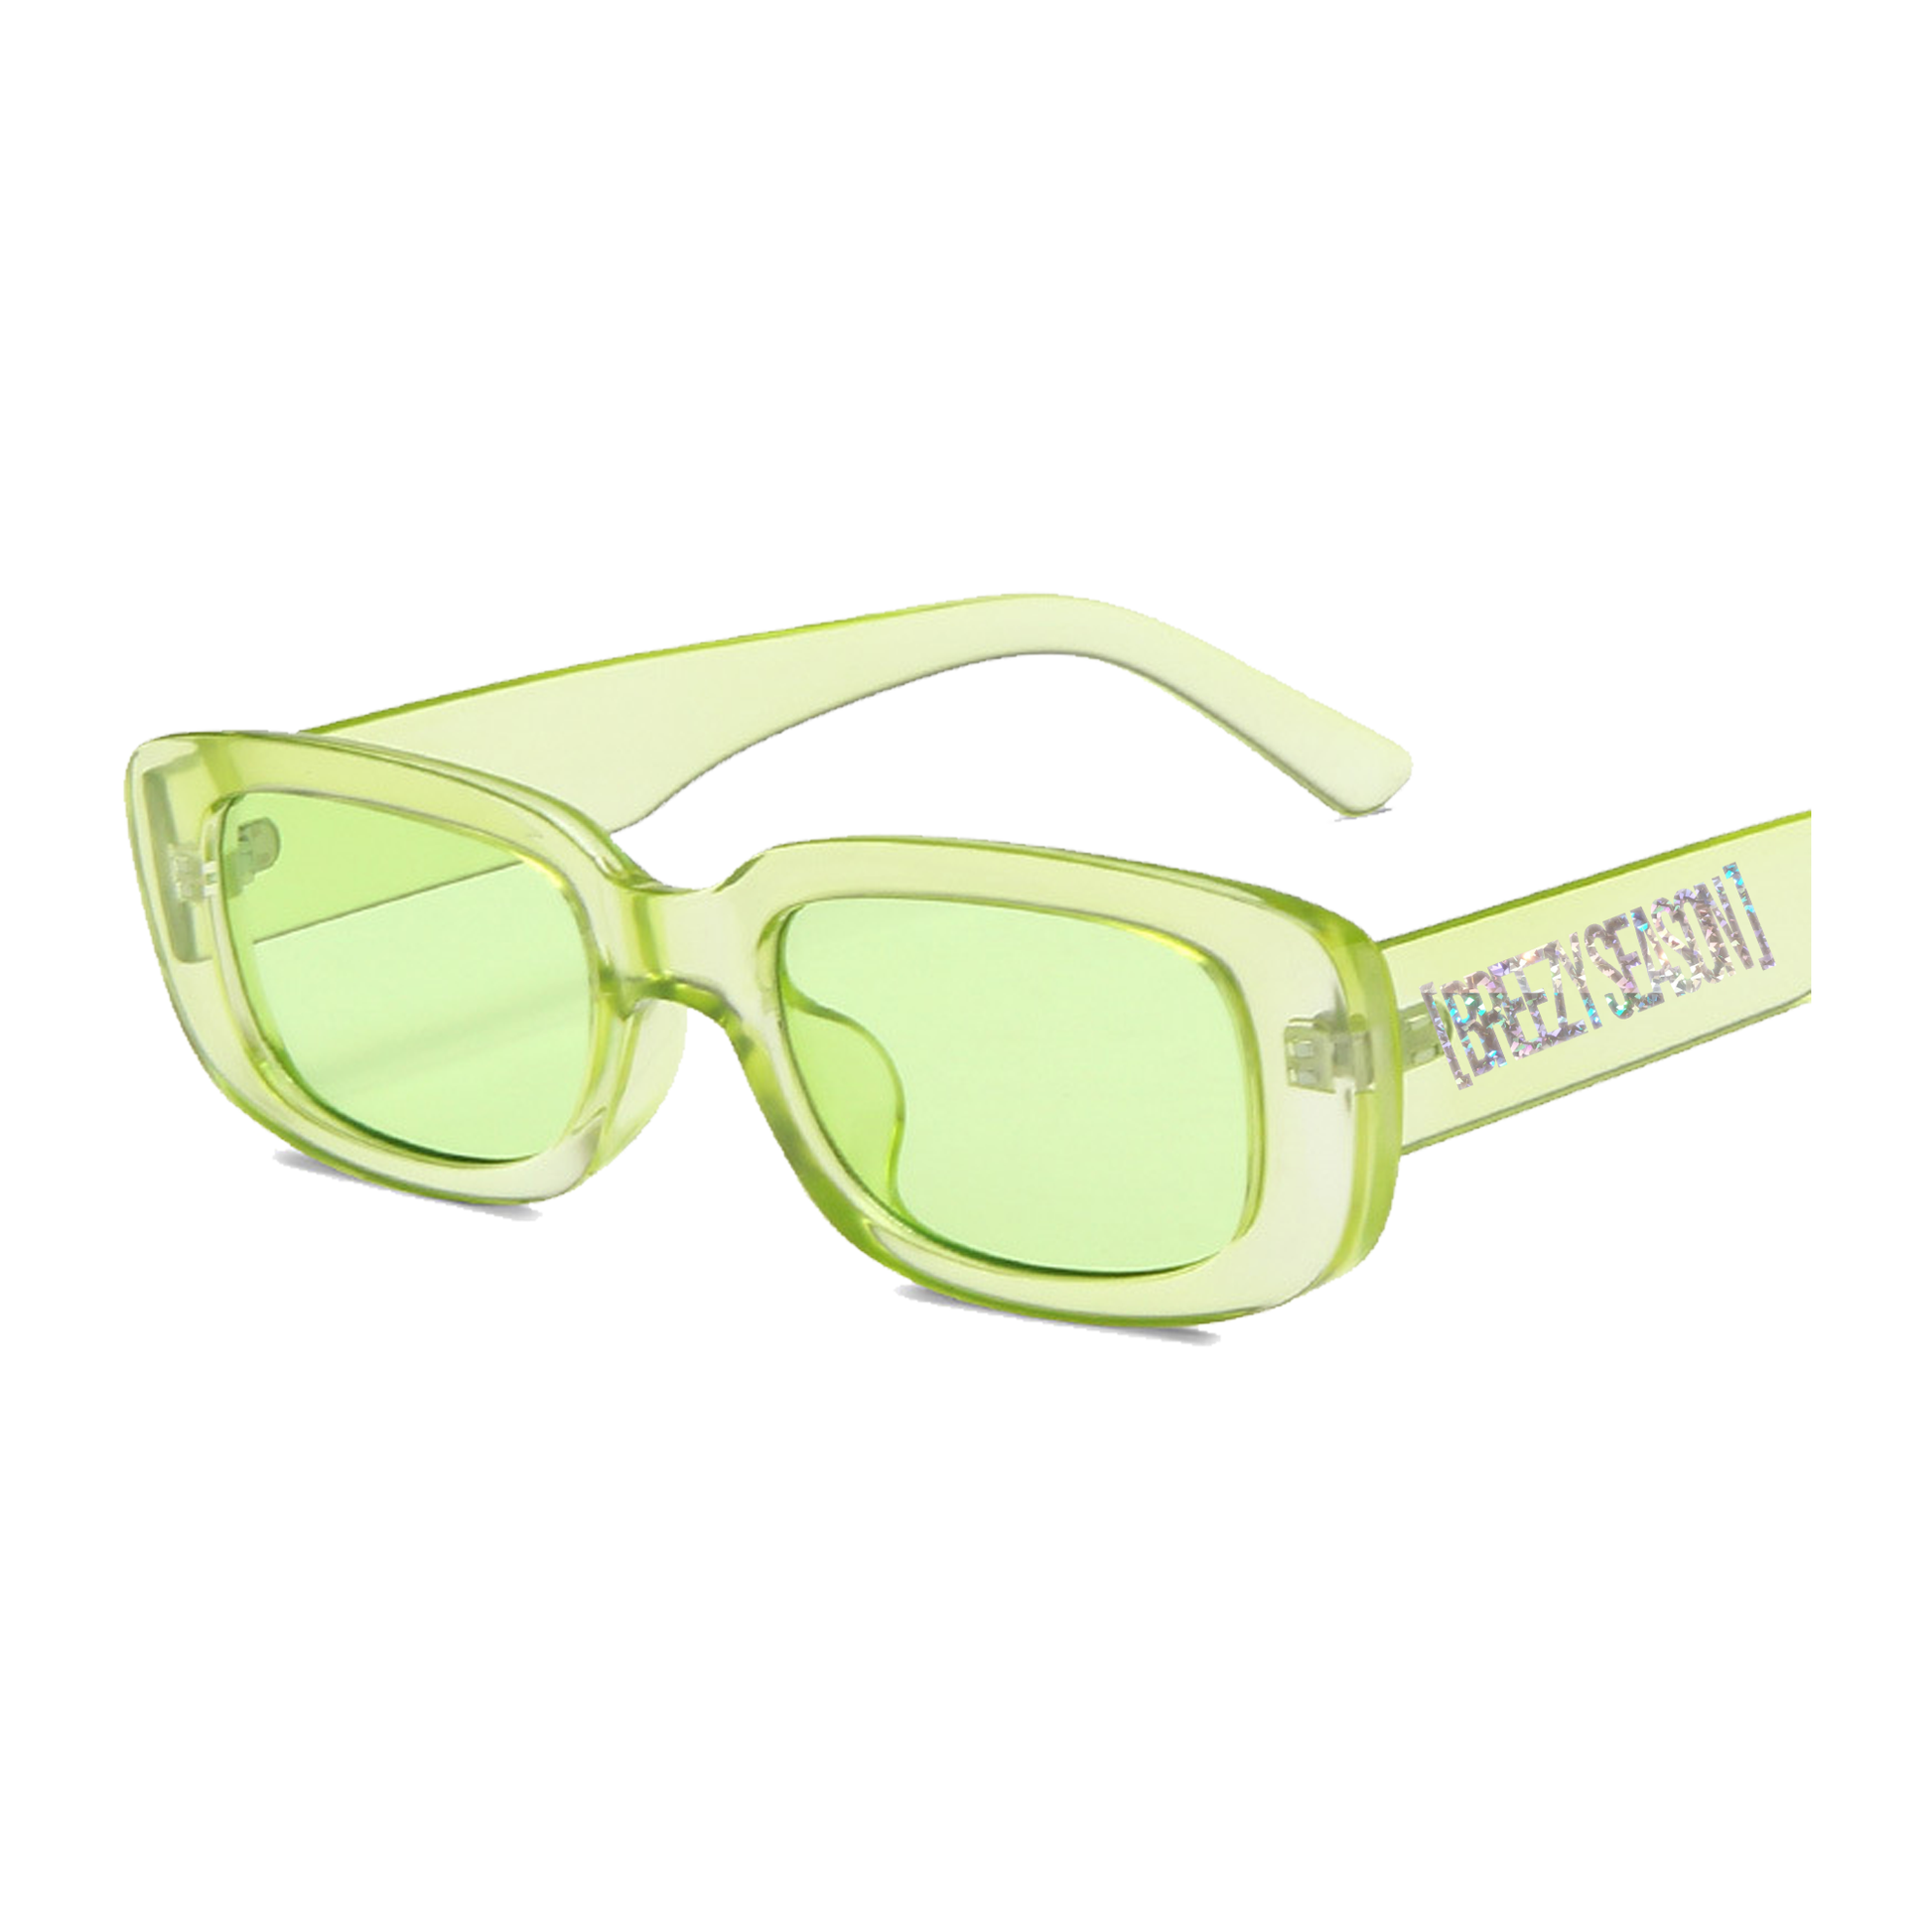 Kiwi Green Retro Sunglasses - Breezy Season 